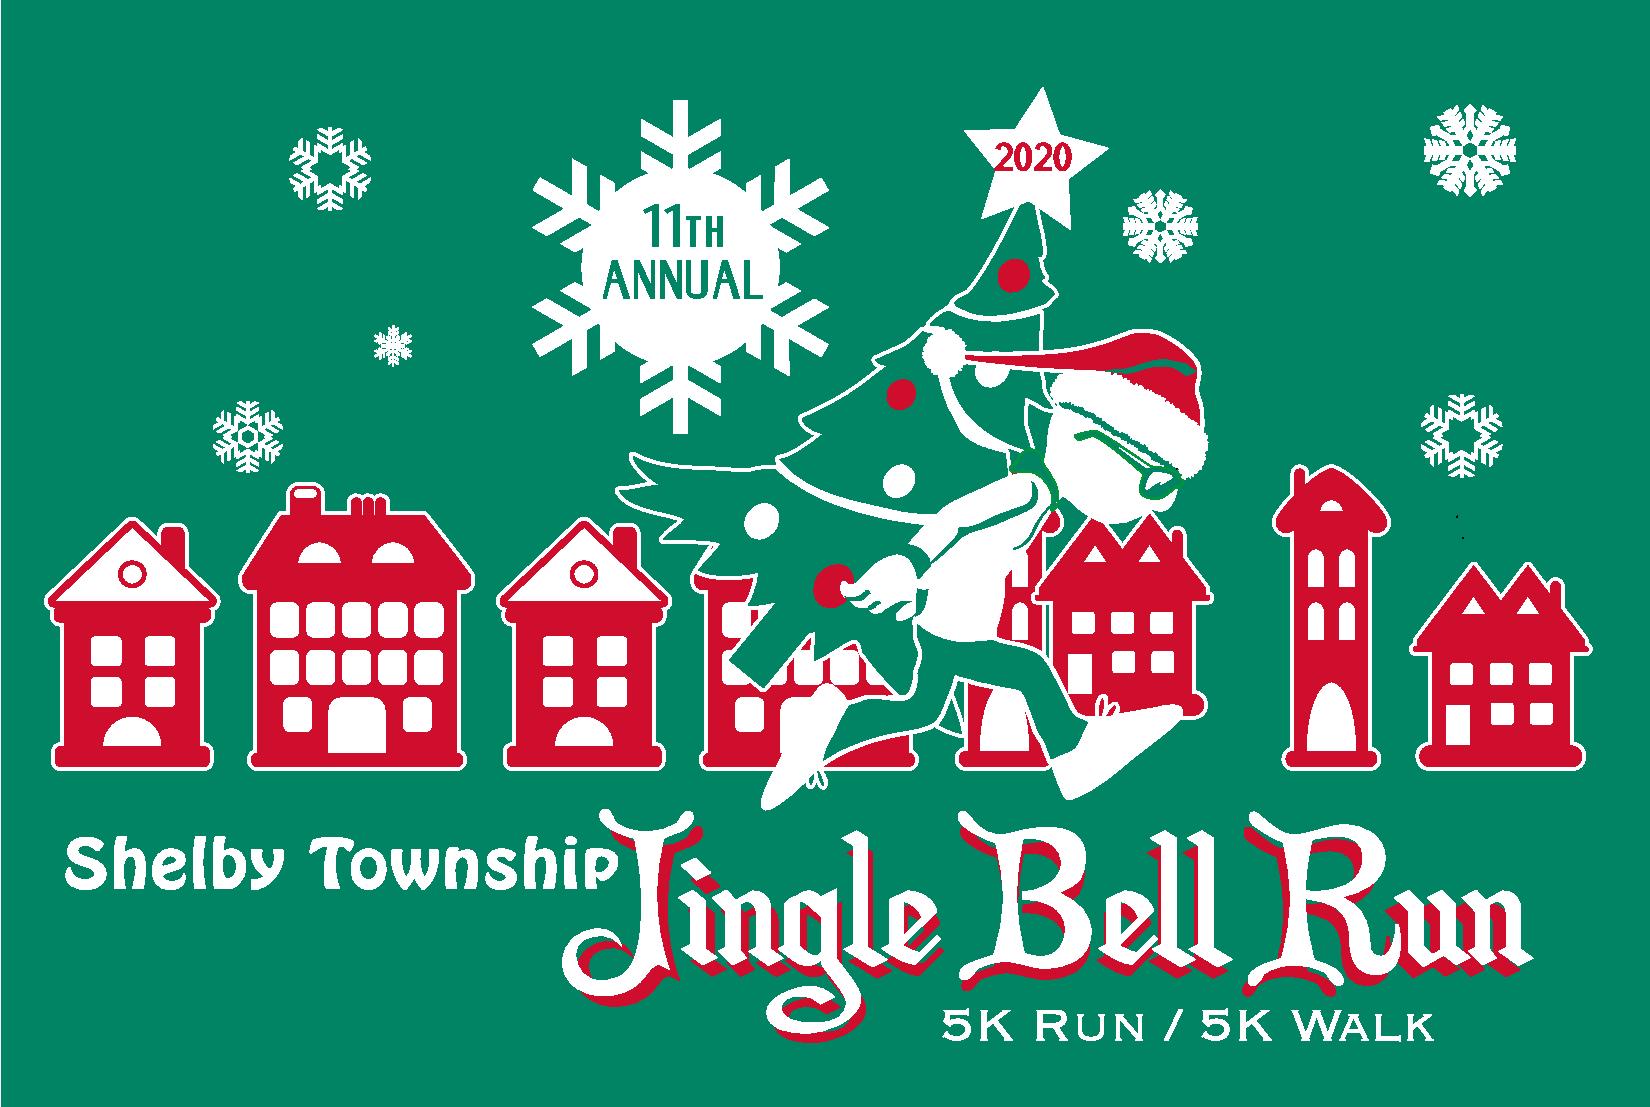 Shelby Township 11th Annual Jingle Bell Run